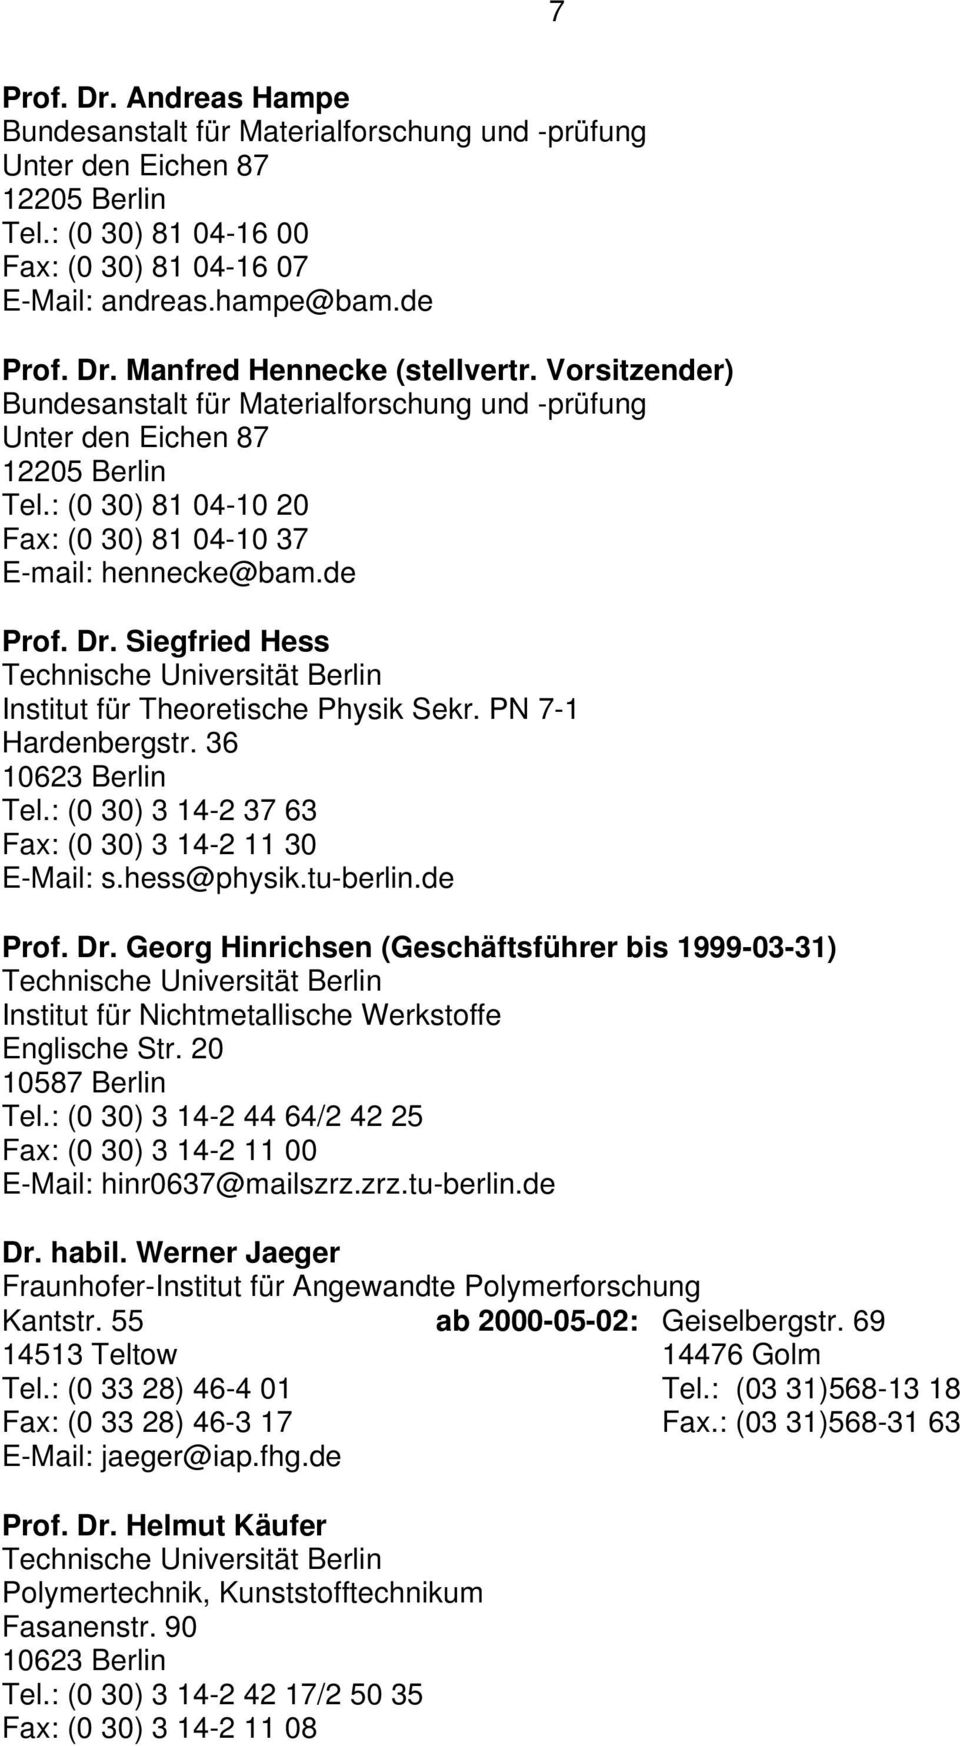 Siegfried Hess Technische Universität Berlin Institut für Theoretische Physik Sekr. PN 7-1 Hardenbergstr. 36 10623 Berlin Tel.: (0 30) 3 14-2 37 63 Fax: (0 30) 3 14-2 11 30 E-Mail: s.hess@physik.